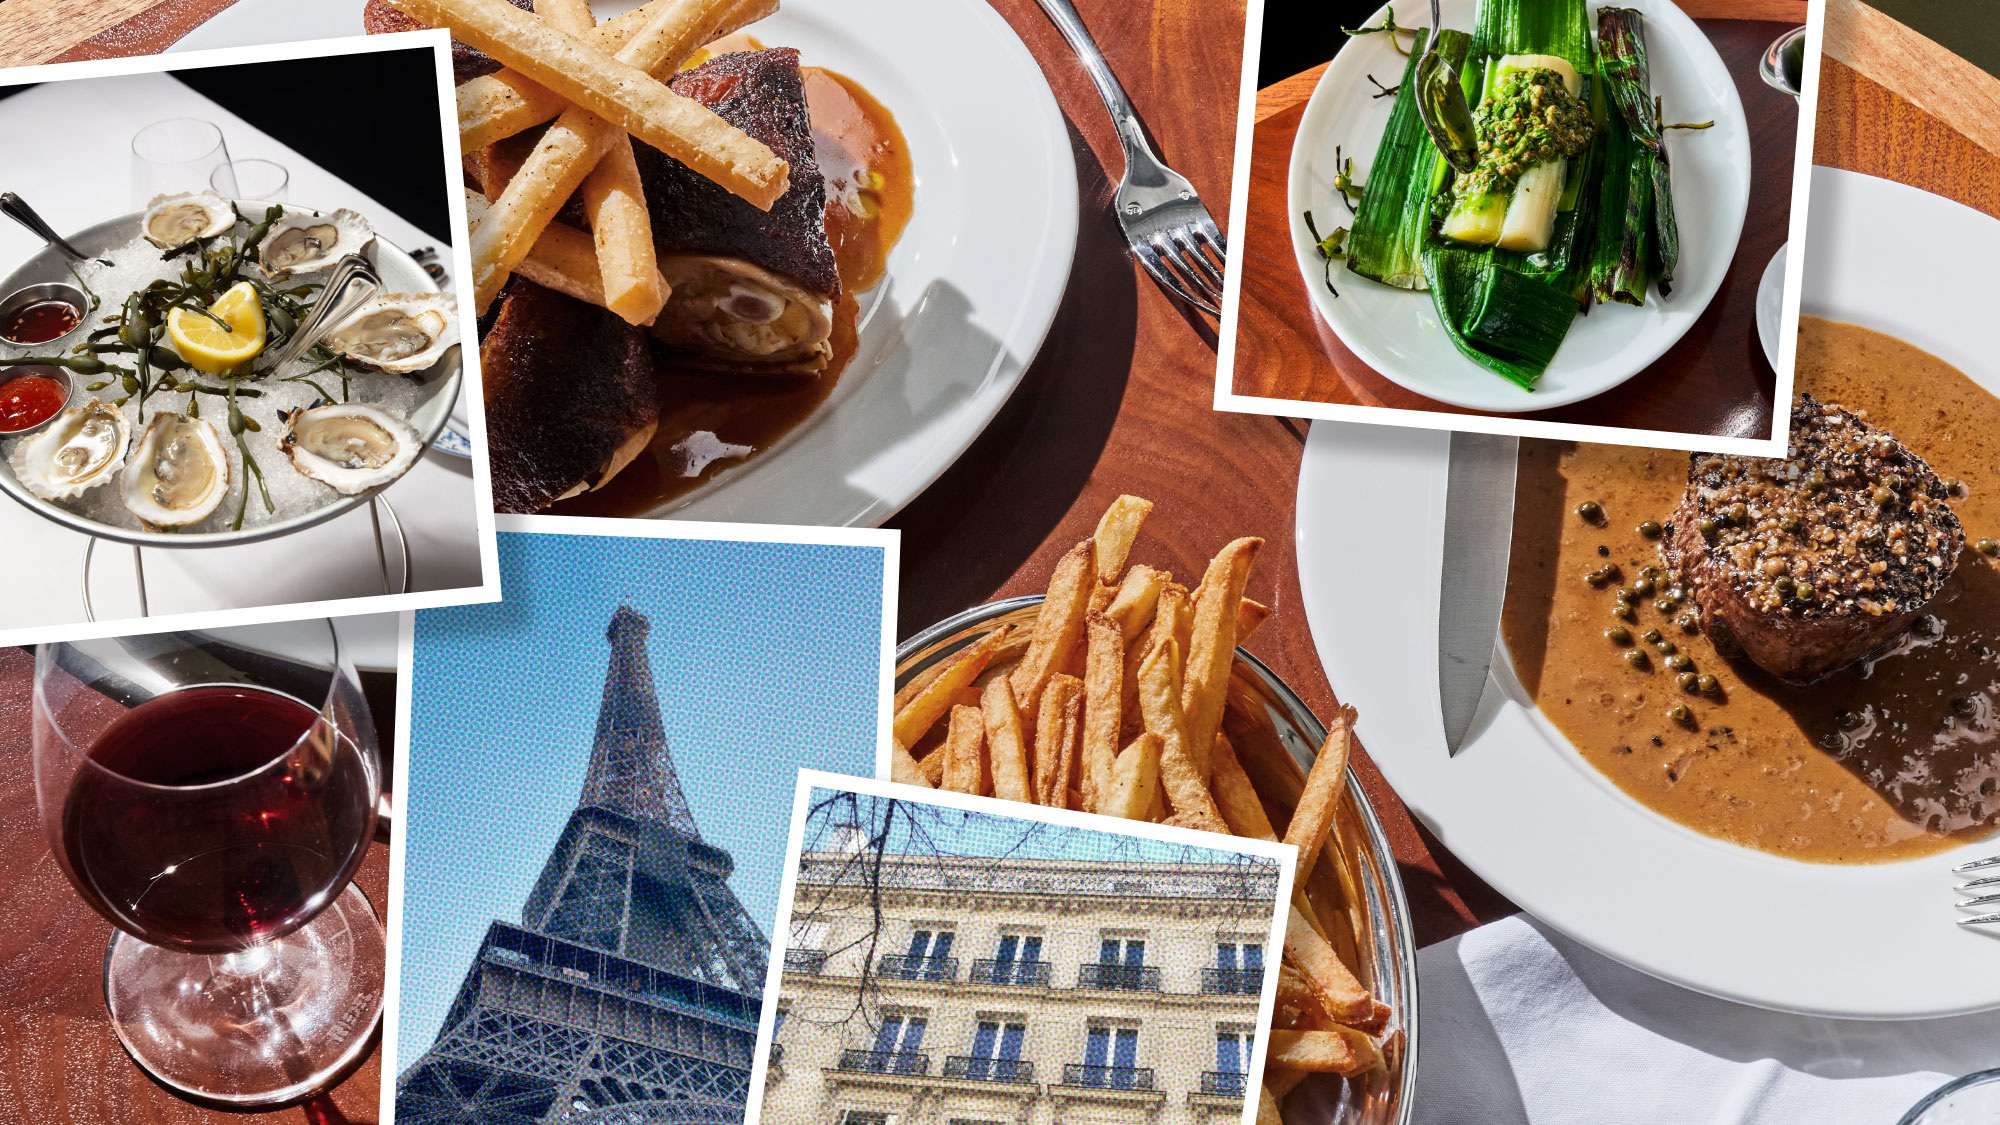 https://blog.resy.com/wp-content/uploads/2023/01/Resy_Blog-Toppers_French-Restaurants-2-2000x1125.jpg